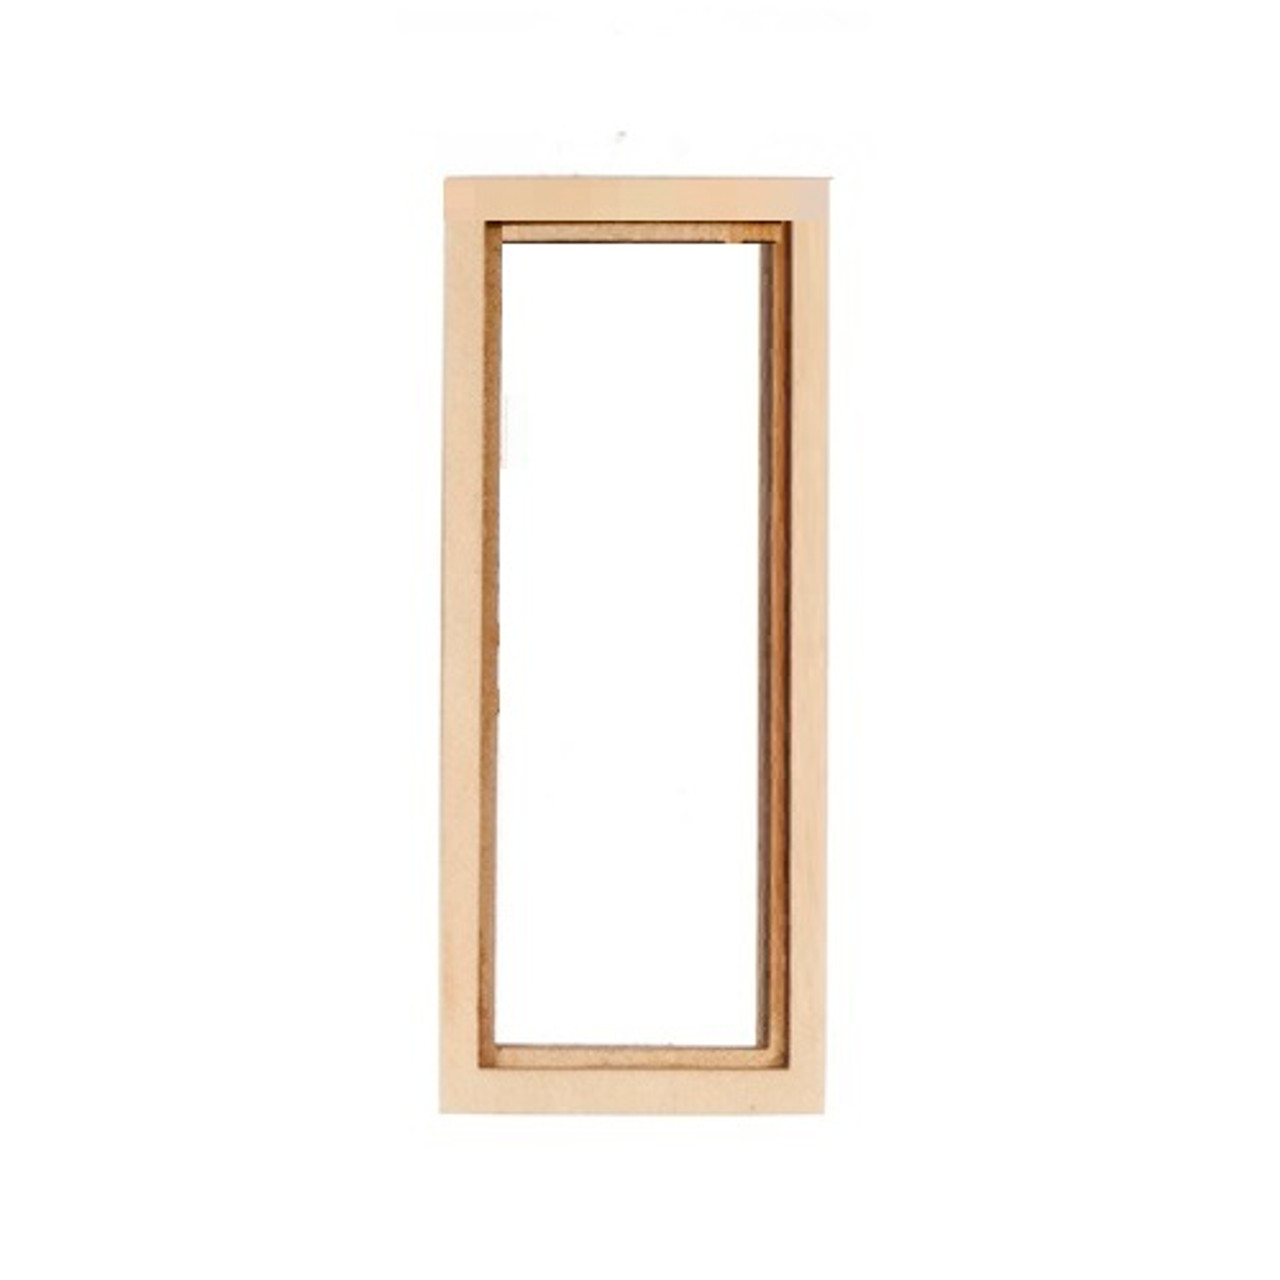 Narrow single panel single window